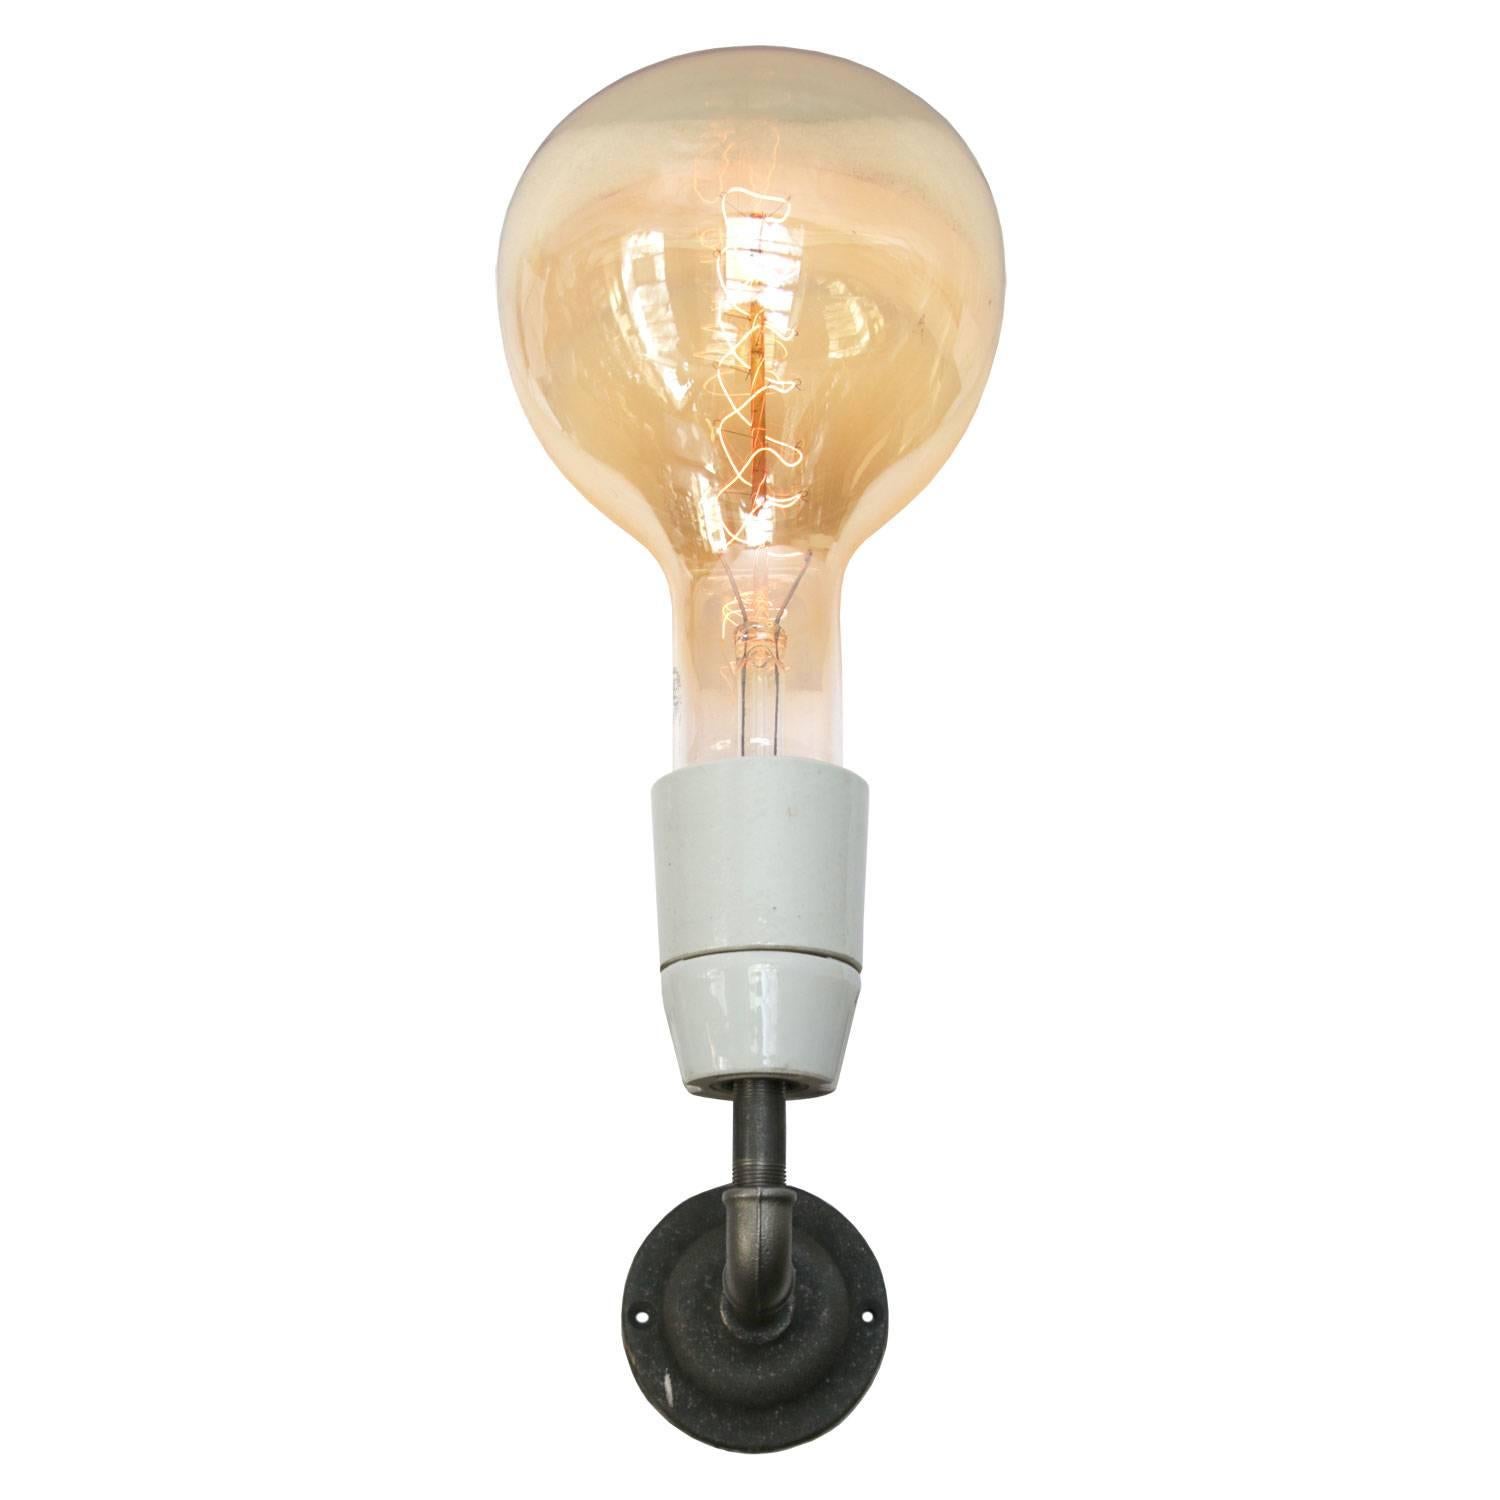 20th Century Porcelain Cast Iron Vintage Industrial Wall Lamp, E39 - E40 Bulb Holder (4x)